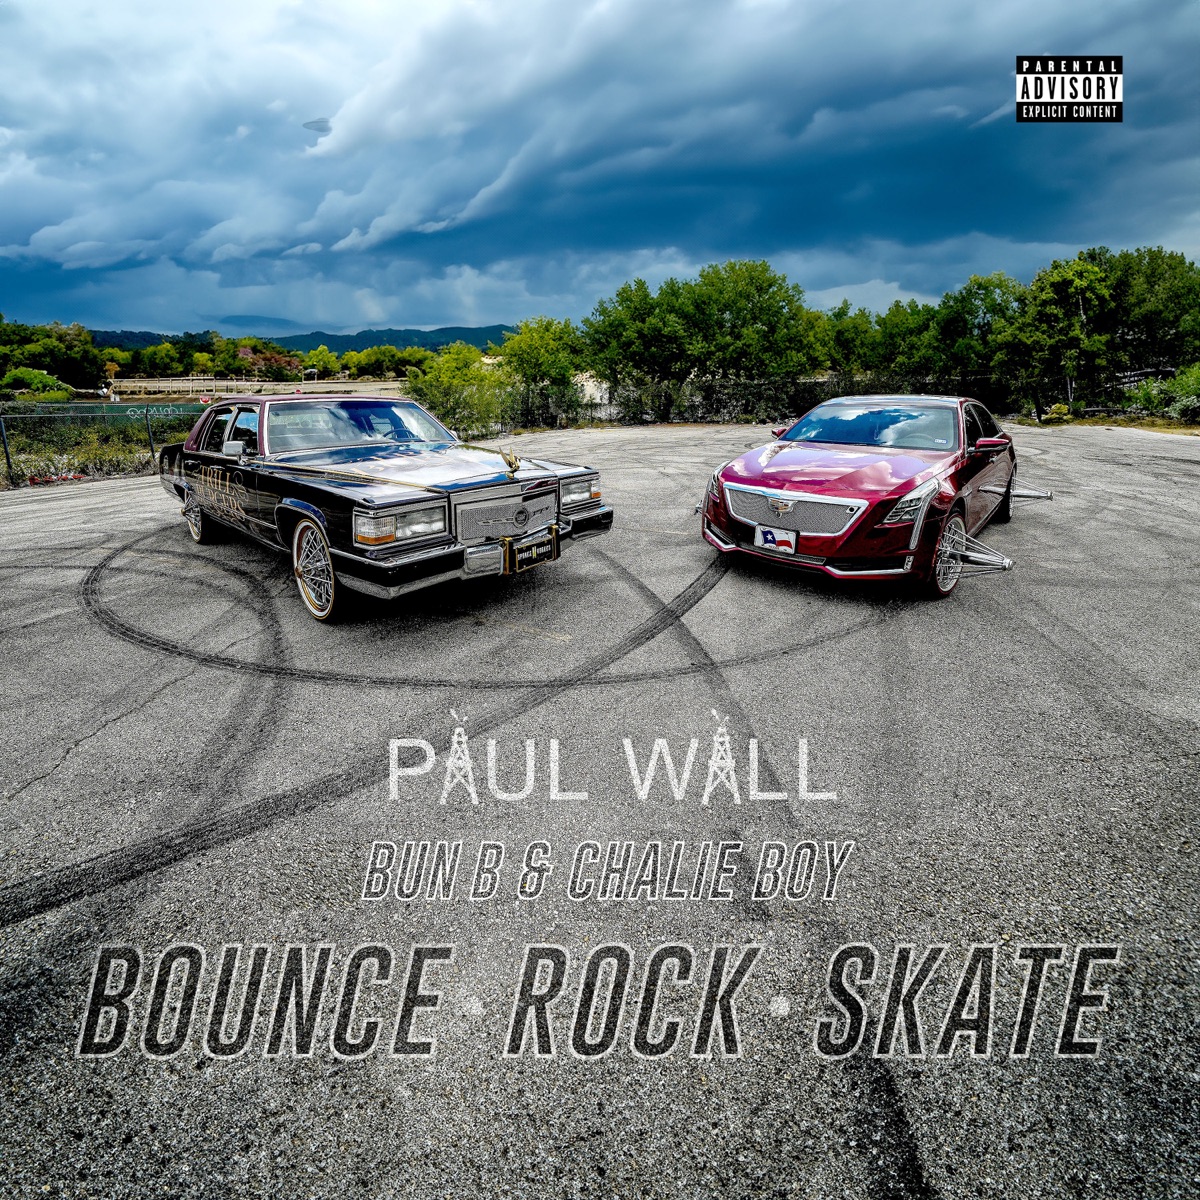 Bounce, Rock, Skate - Single - Album by Paul Wall, Bun B & Chalie